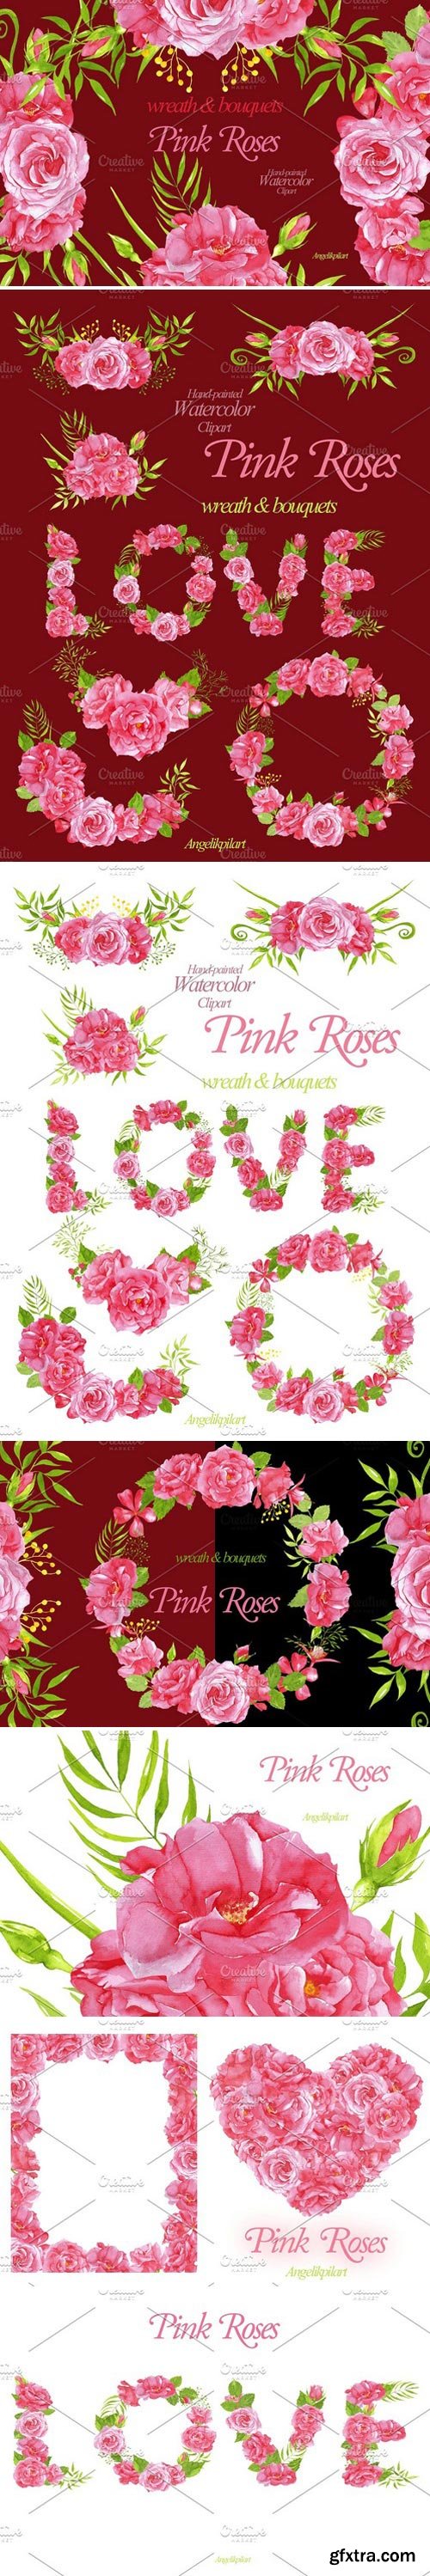 CM - watercolor PinkRoses wreath&bouquets 1600048